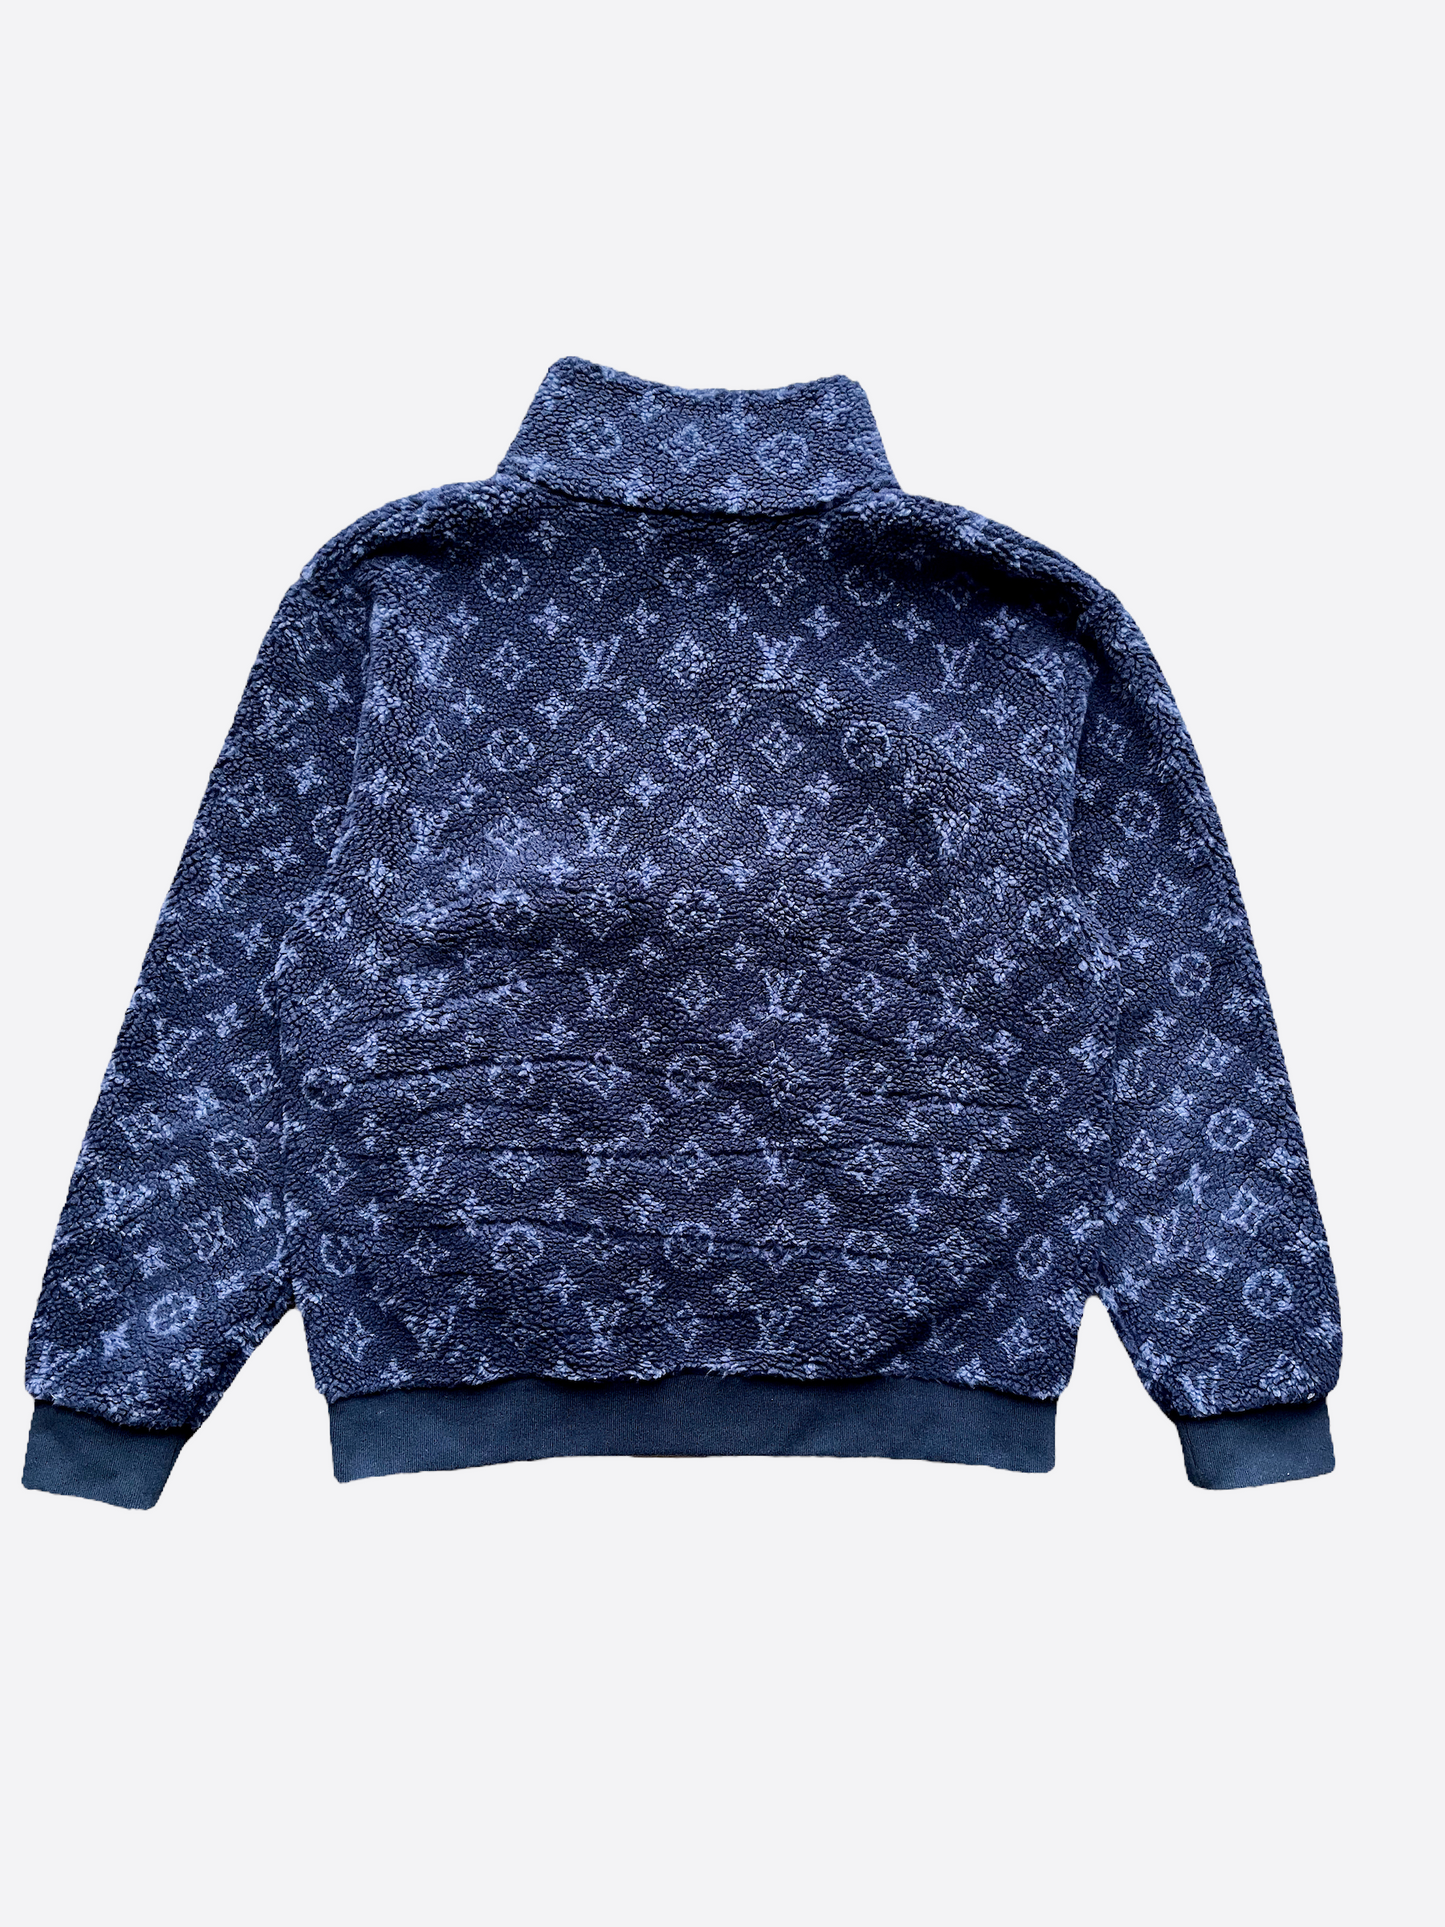 Louis Vuitton, Jackets & Coats, Louis Vuitton Mens Teddy Zip Jacket  Monogram Polyester Fleece Black